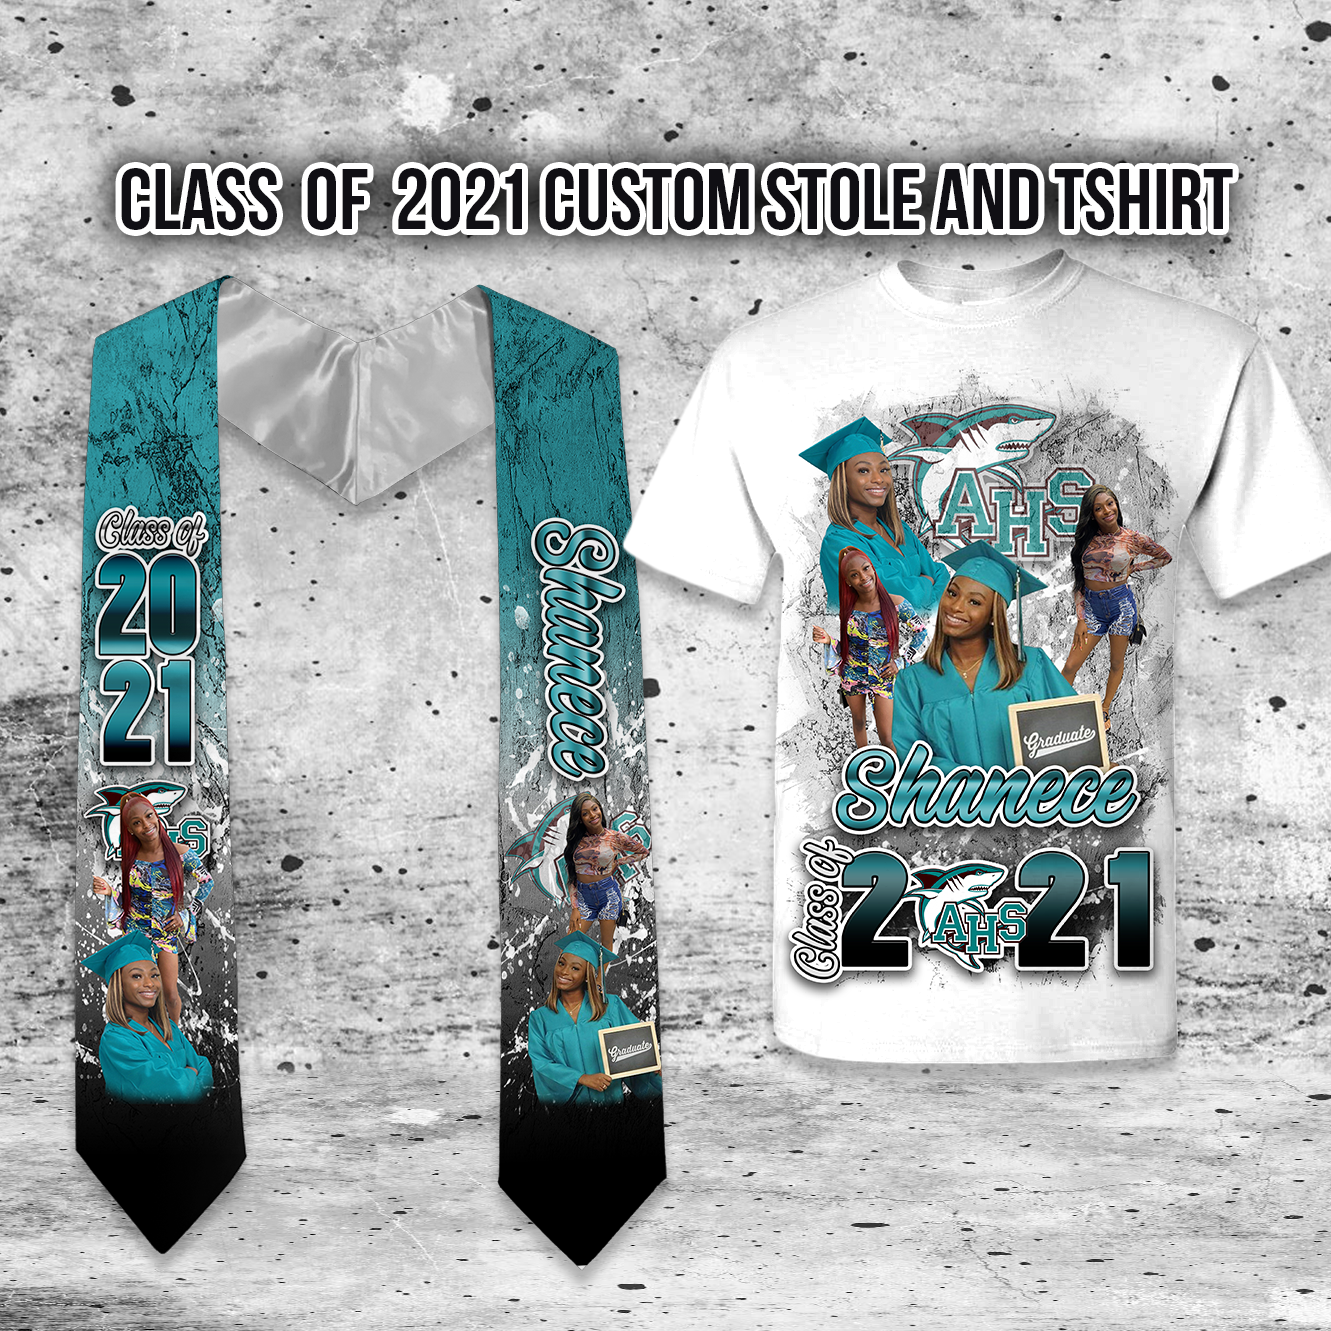 Custom Digital Design (Graduation Stole and T-Shirt) - SthrngurlCreations